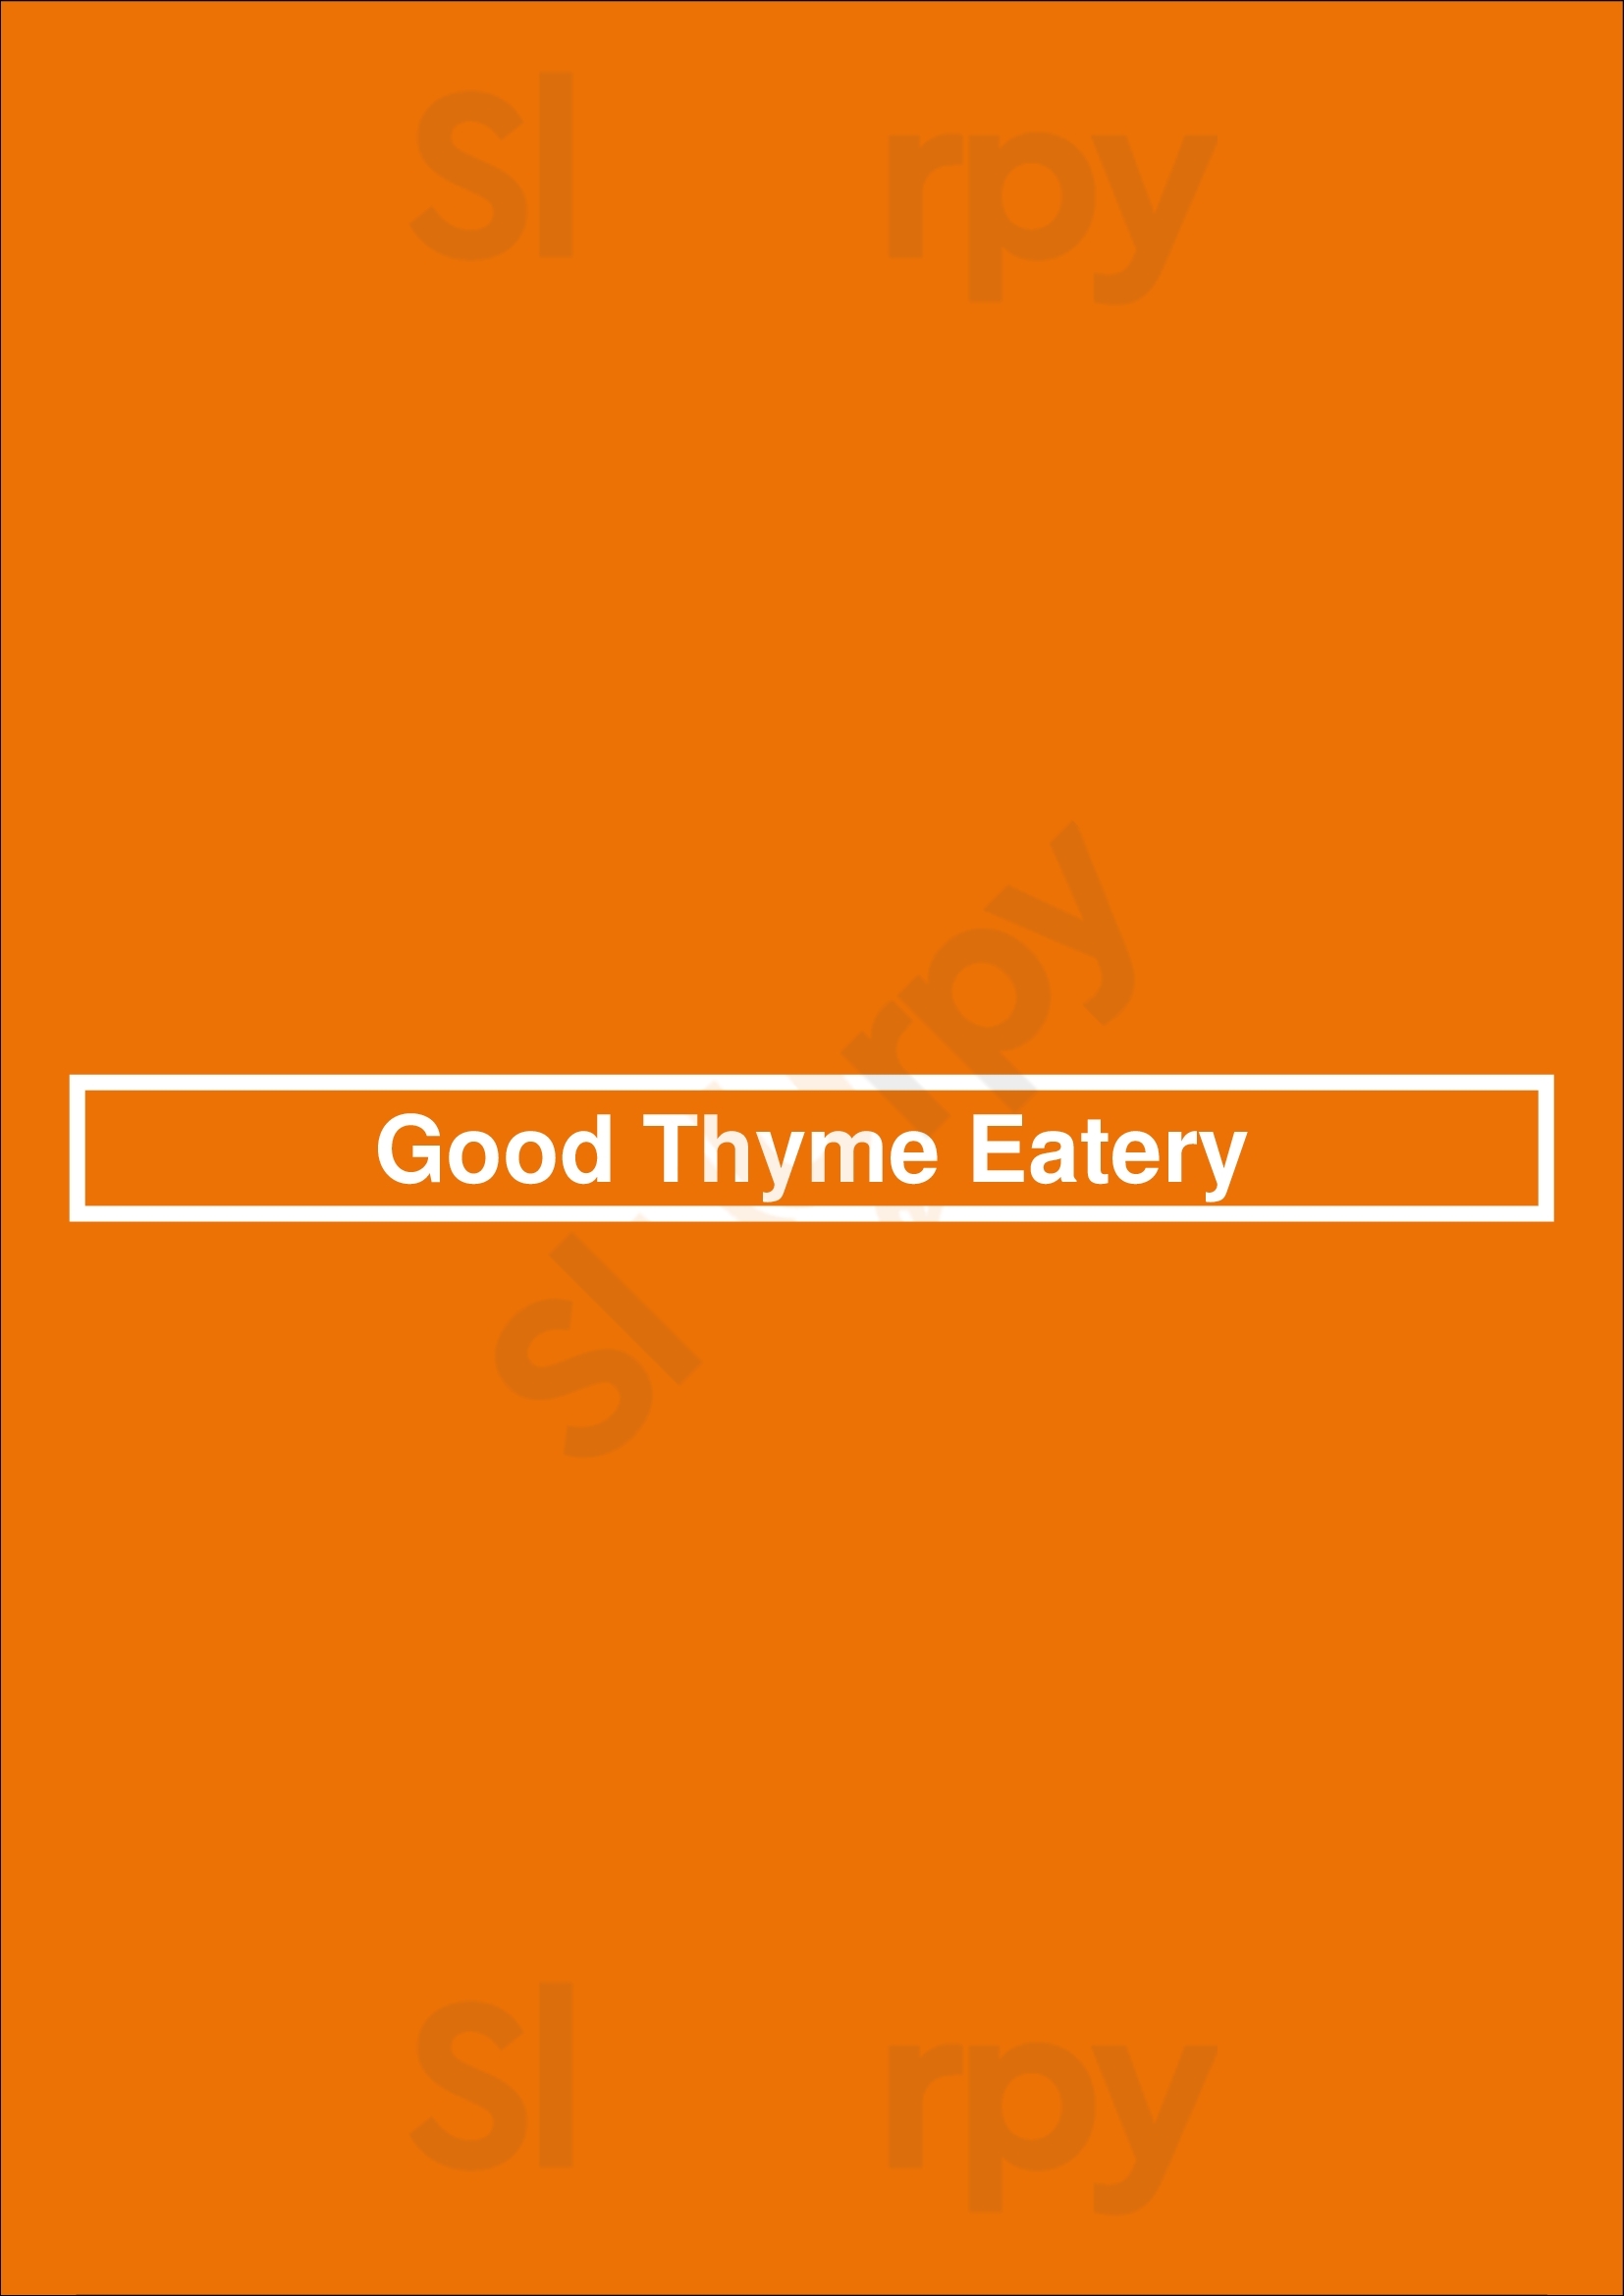 Good Thyme Eatery Provo Menu - 1